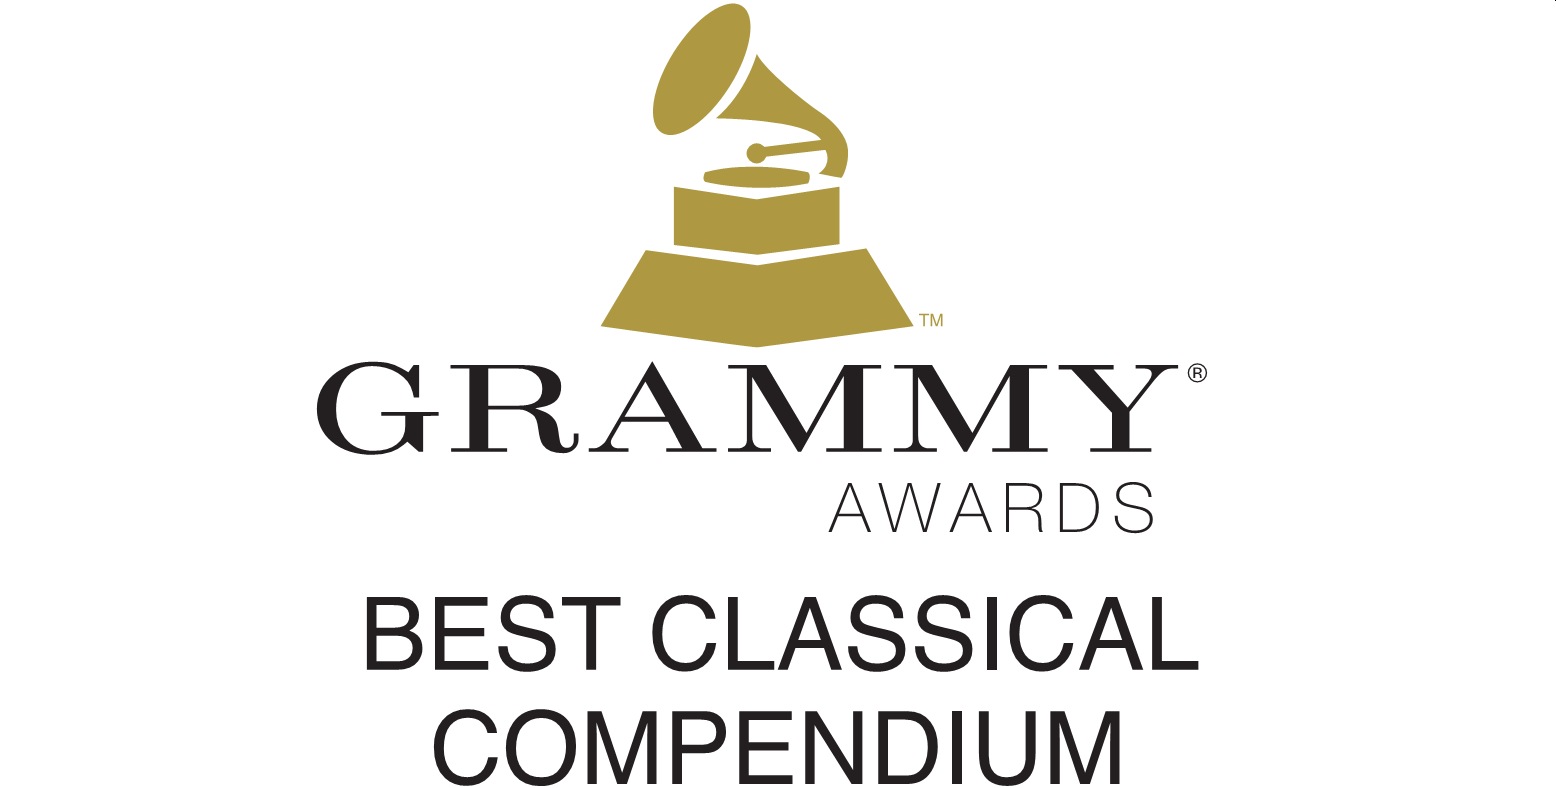 Grammy Award: 'Best Classical Compendium' (2017)